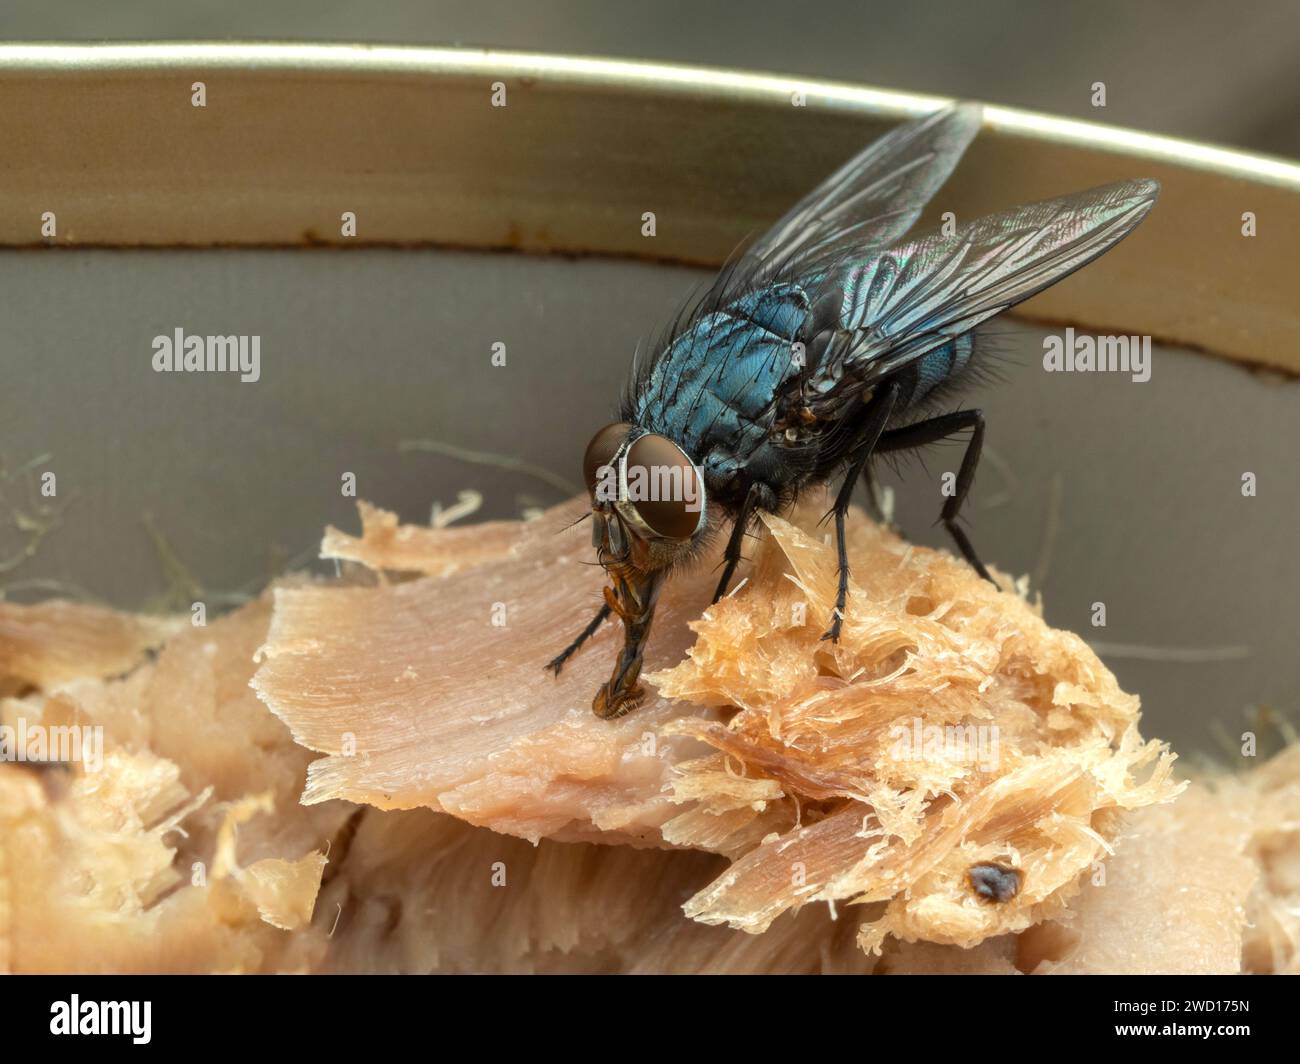 Bluish common blowfly or bottle fly (Calliphora vicina), feeding on tinned tuna. Delta, British Columbia, Canada Stock Photo